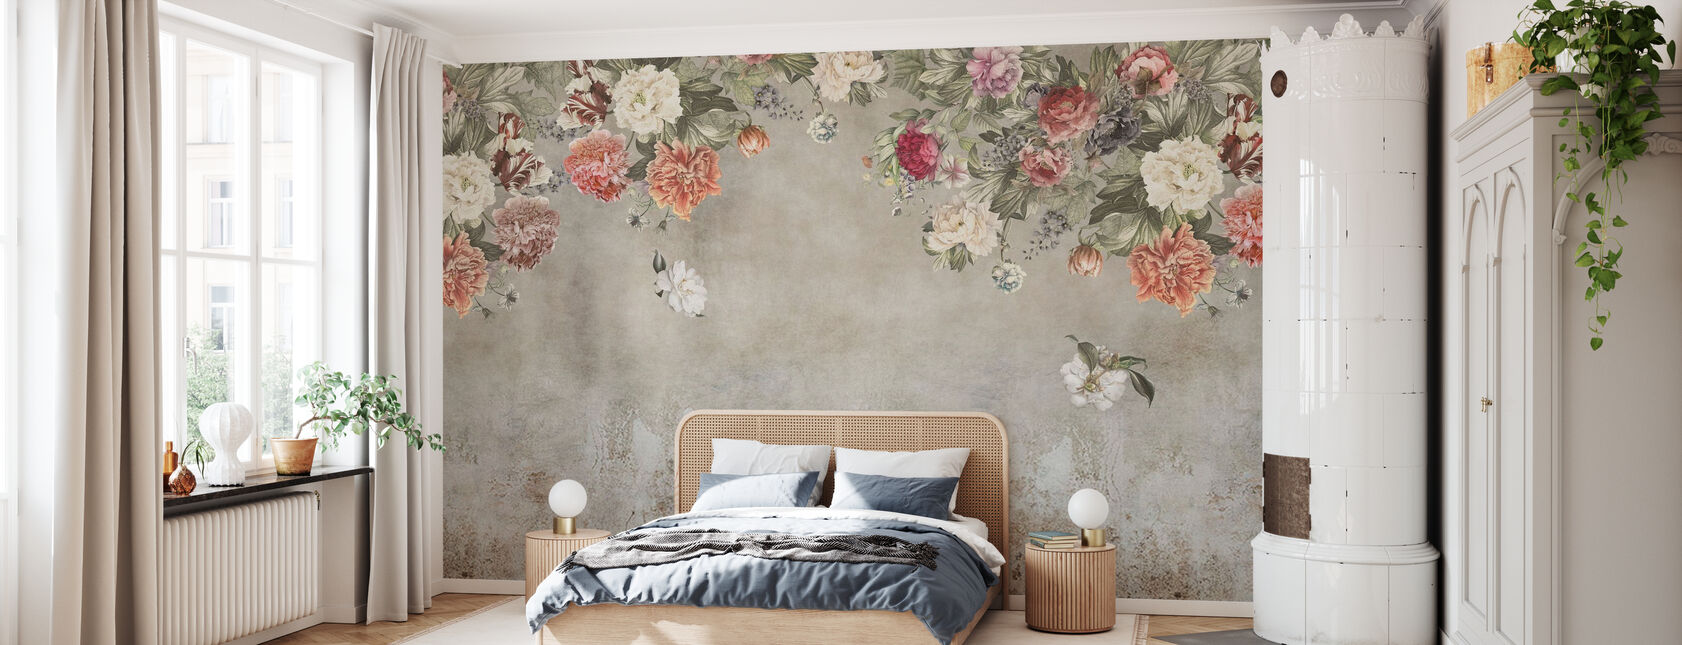 Vintage blomma vägg - Tapet - Sovrum